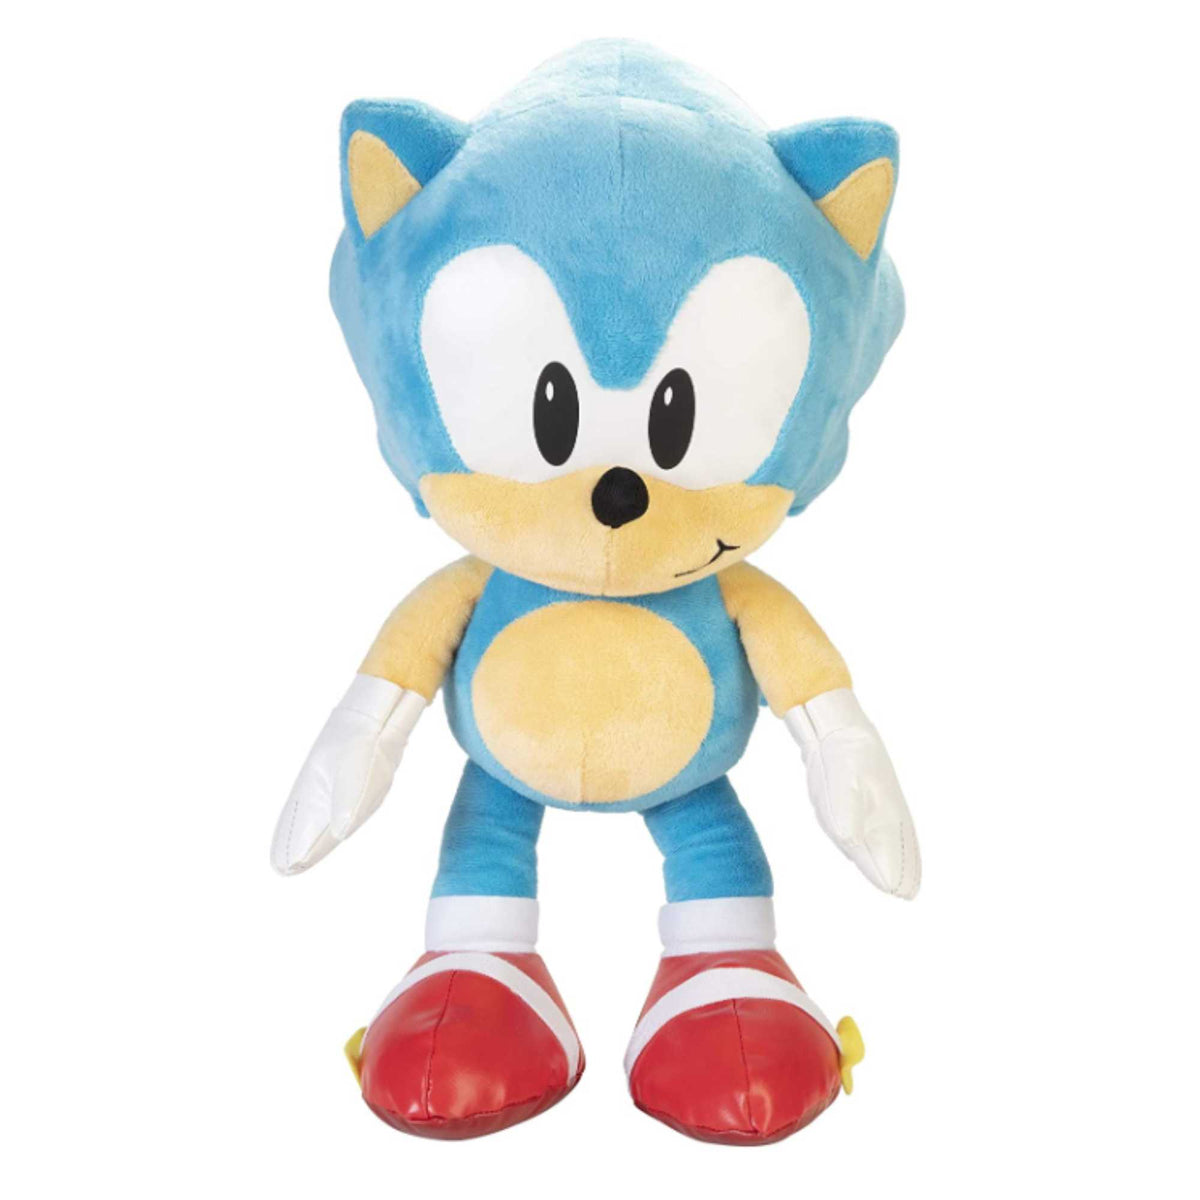 Sonic the Hedgehog Jumbo Plush Toy